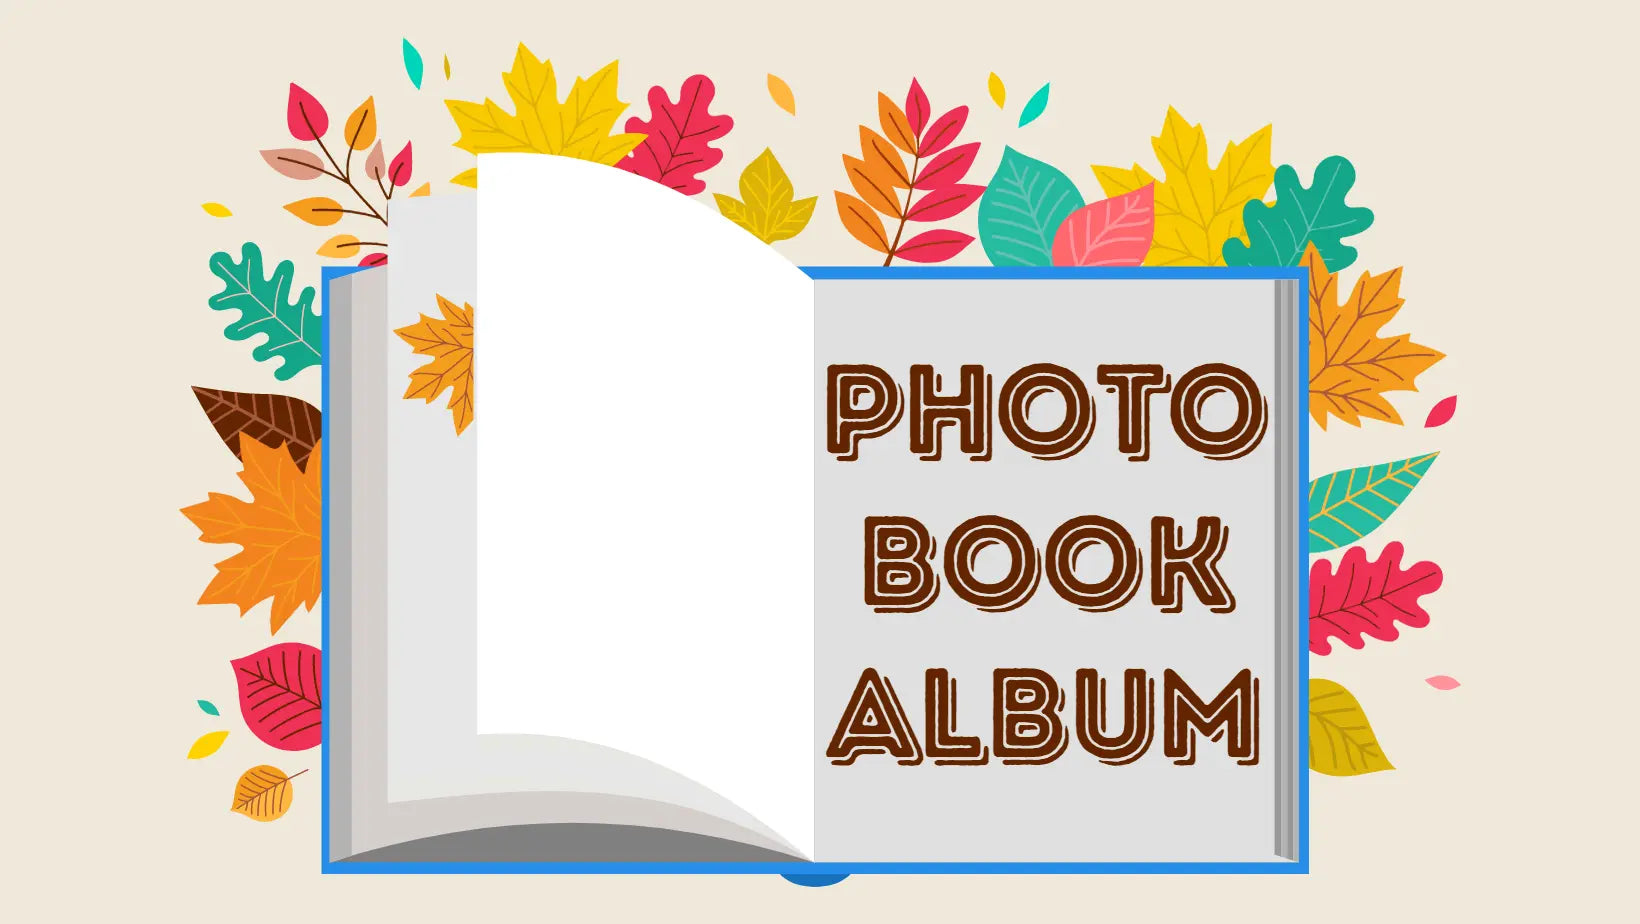 Flip through memories in a photo book album